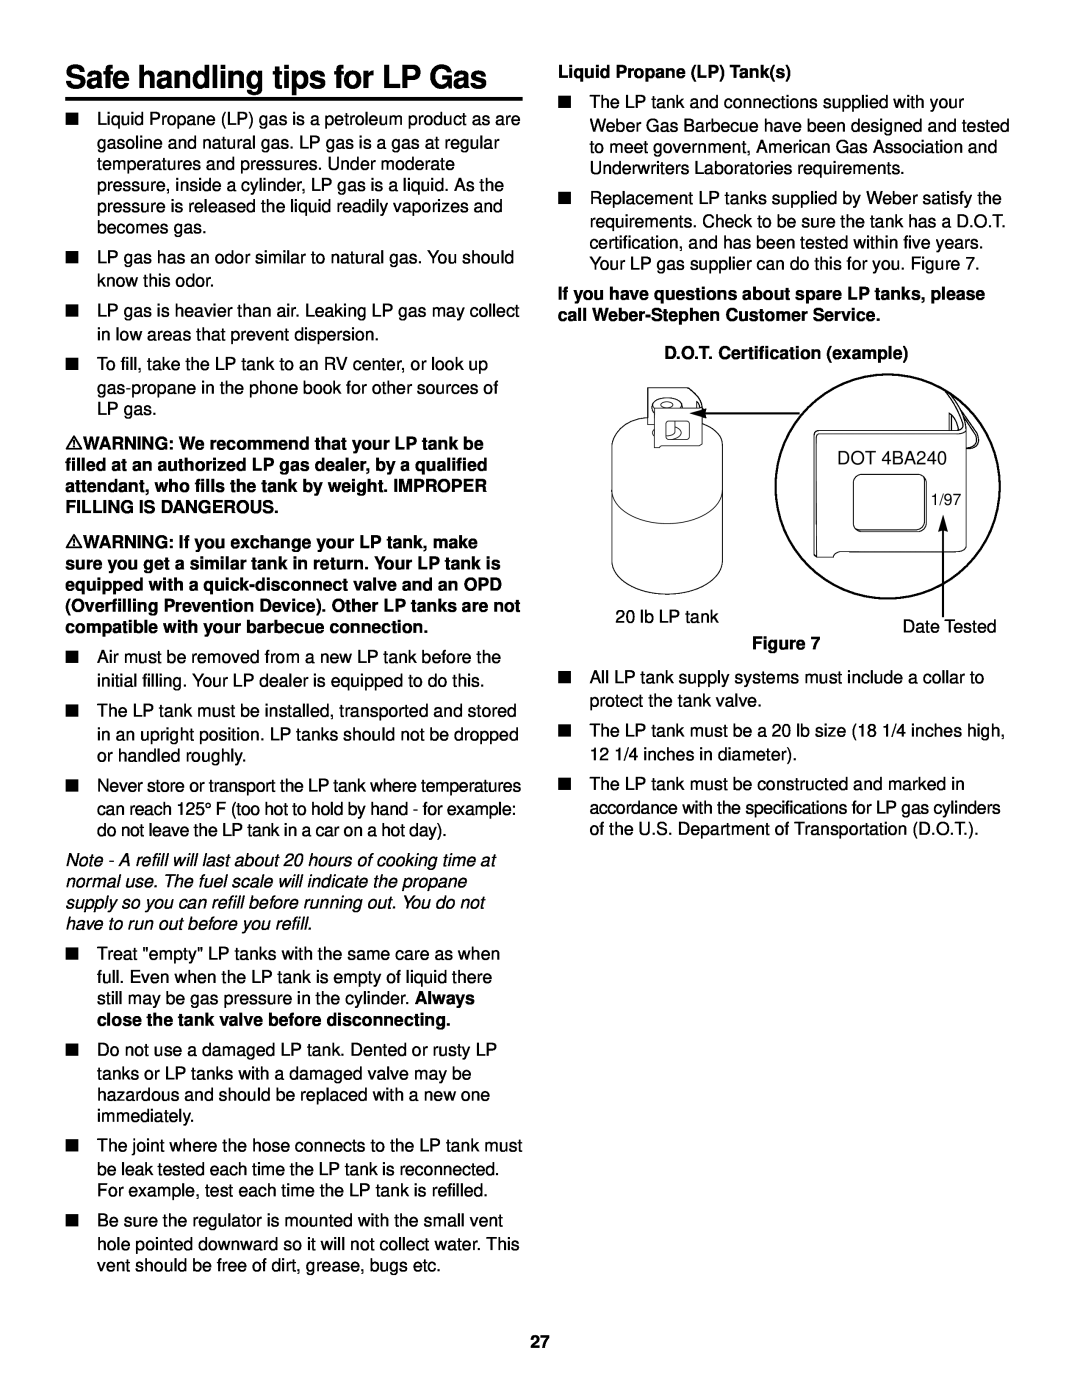 Weber 98583 owner manual Safe handling tips for LP Gas, DOT 4BA240, Liquid Propane LP Tanks, D.O.T. Certification example 